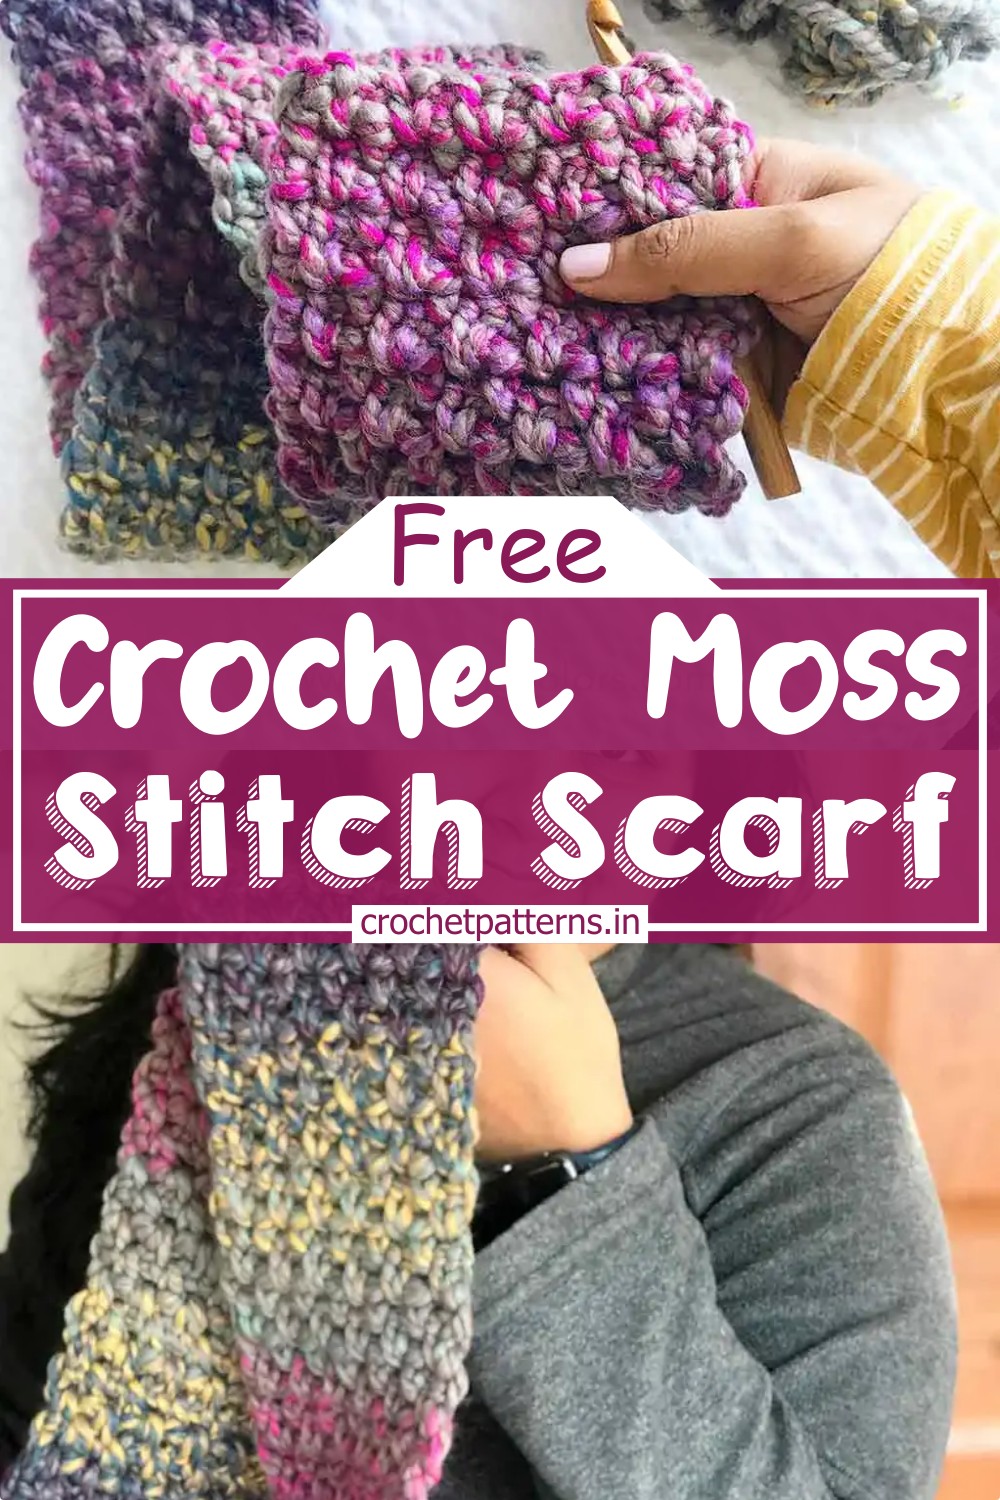 Crochet Moss Stitch Scarf